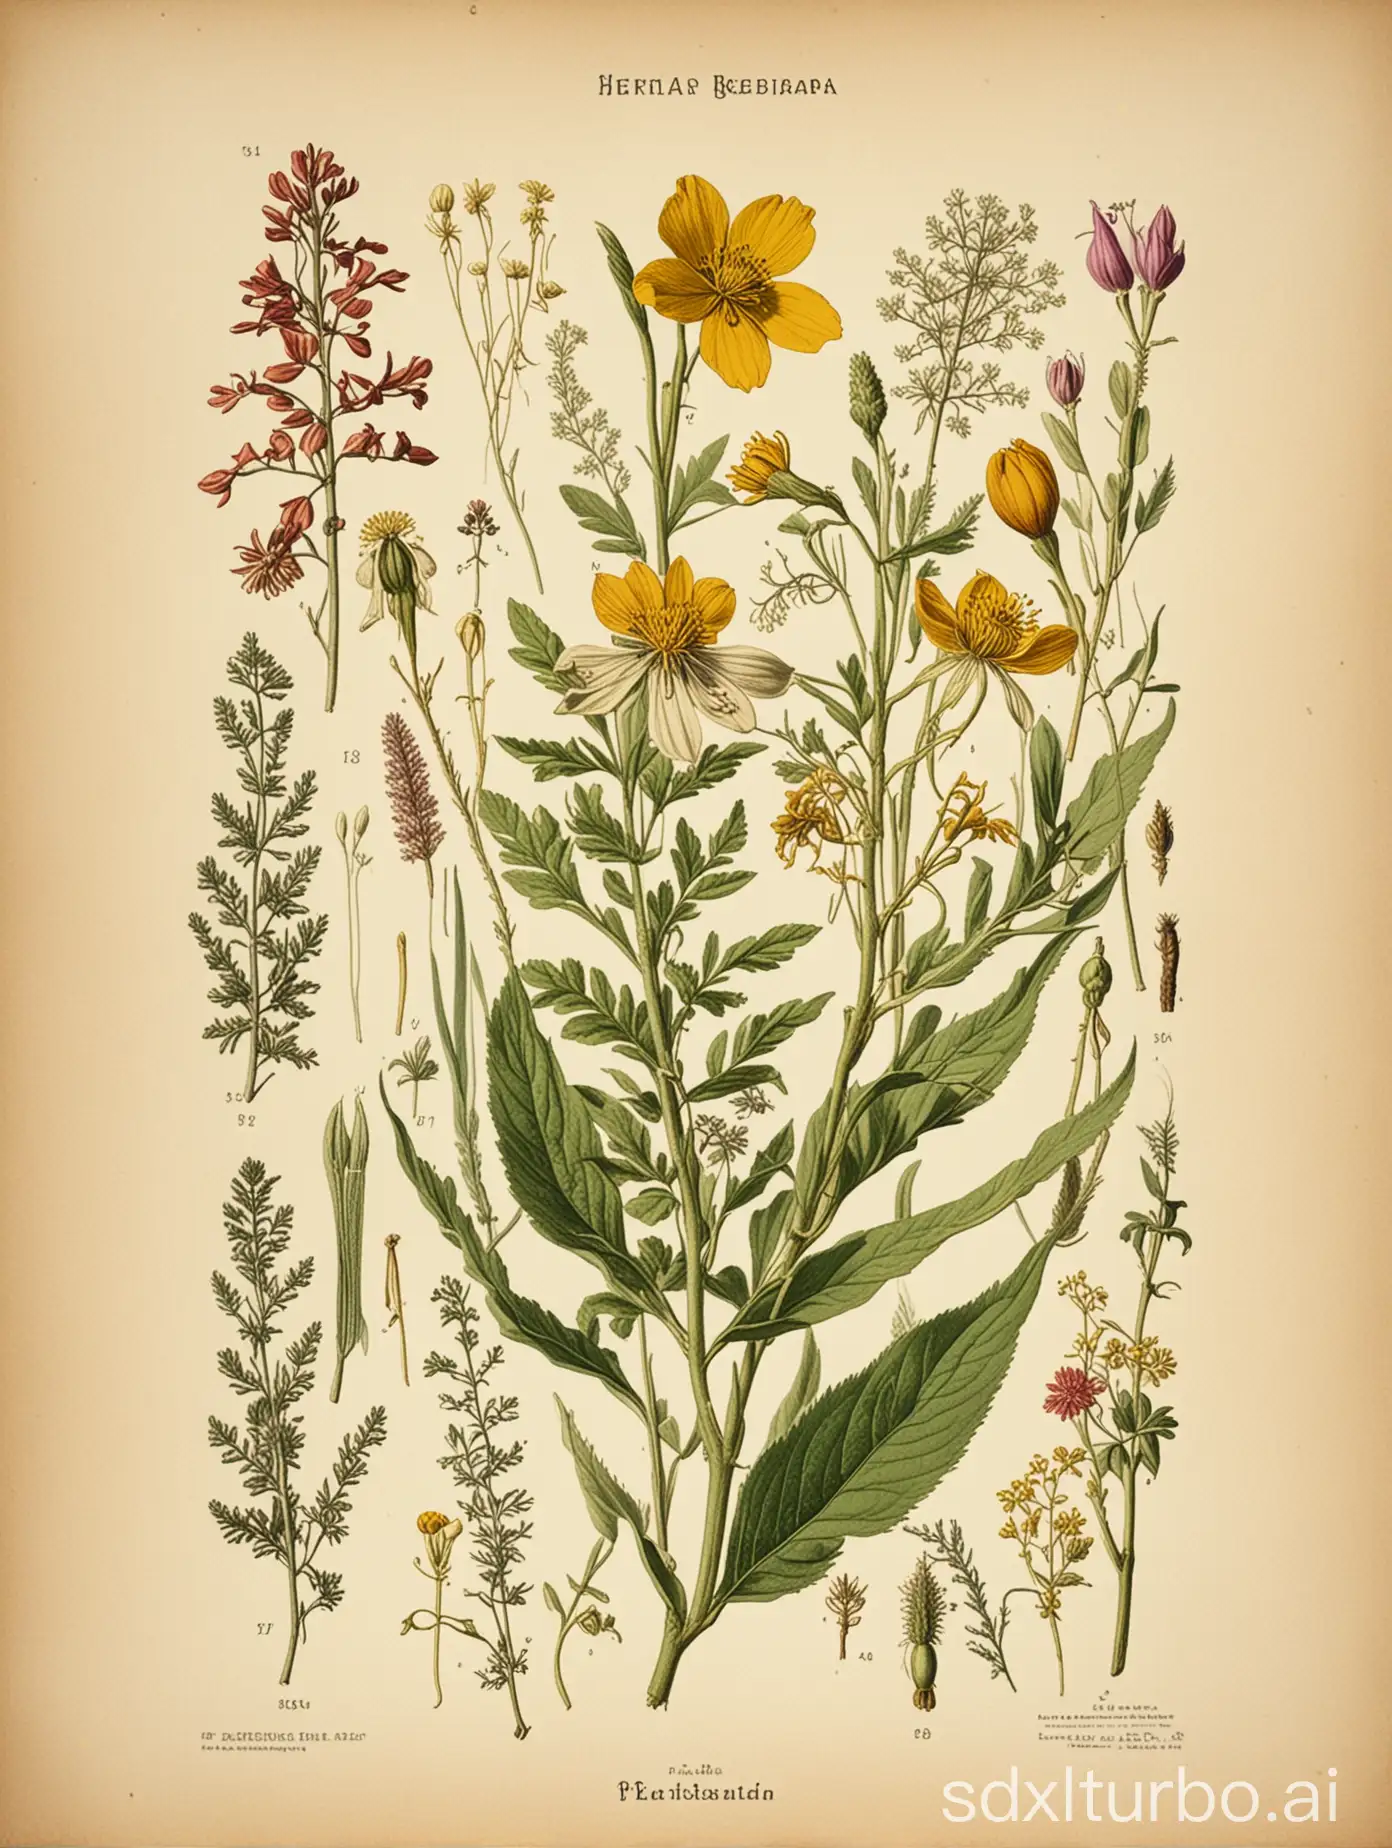 Botanical herbarium poster of a wildflower